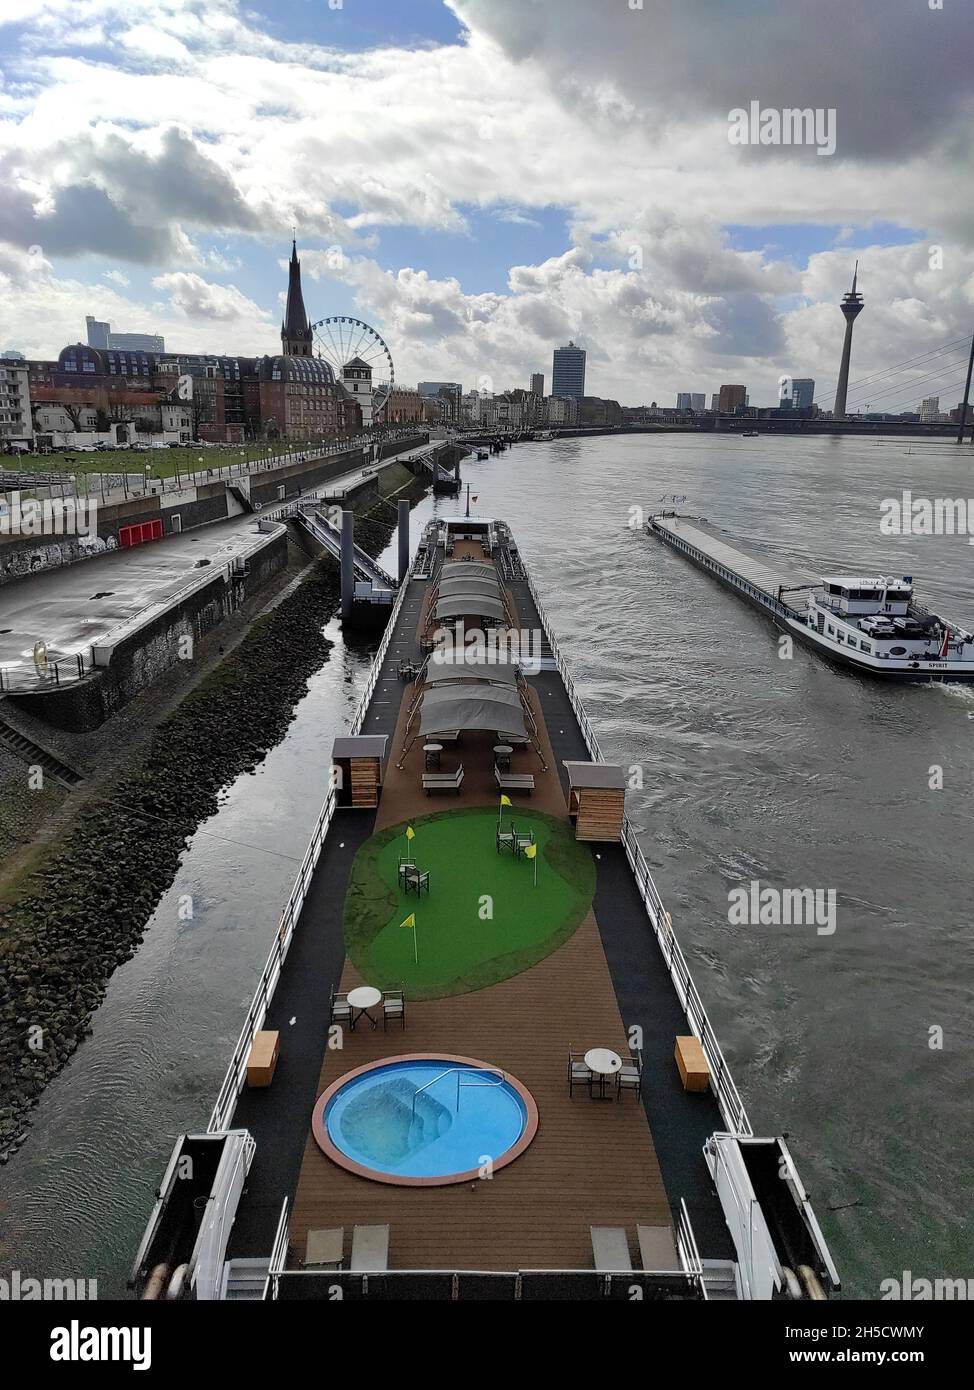 river cruise with pool and golf course on the Rhine, Germany, North Rhine-Westphalia, Lower Rhine, Dusseldorf Stock Photo